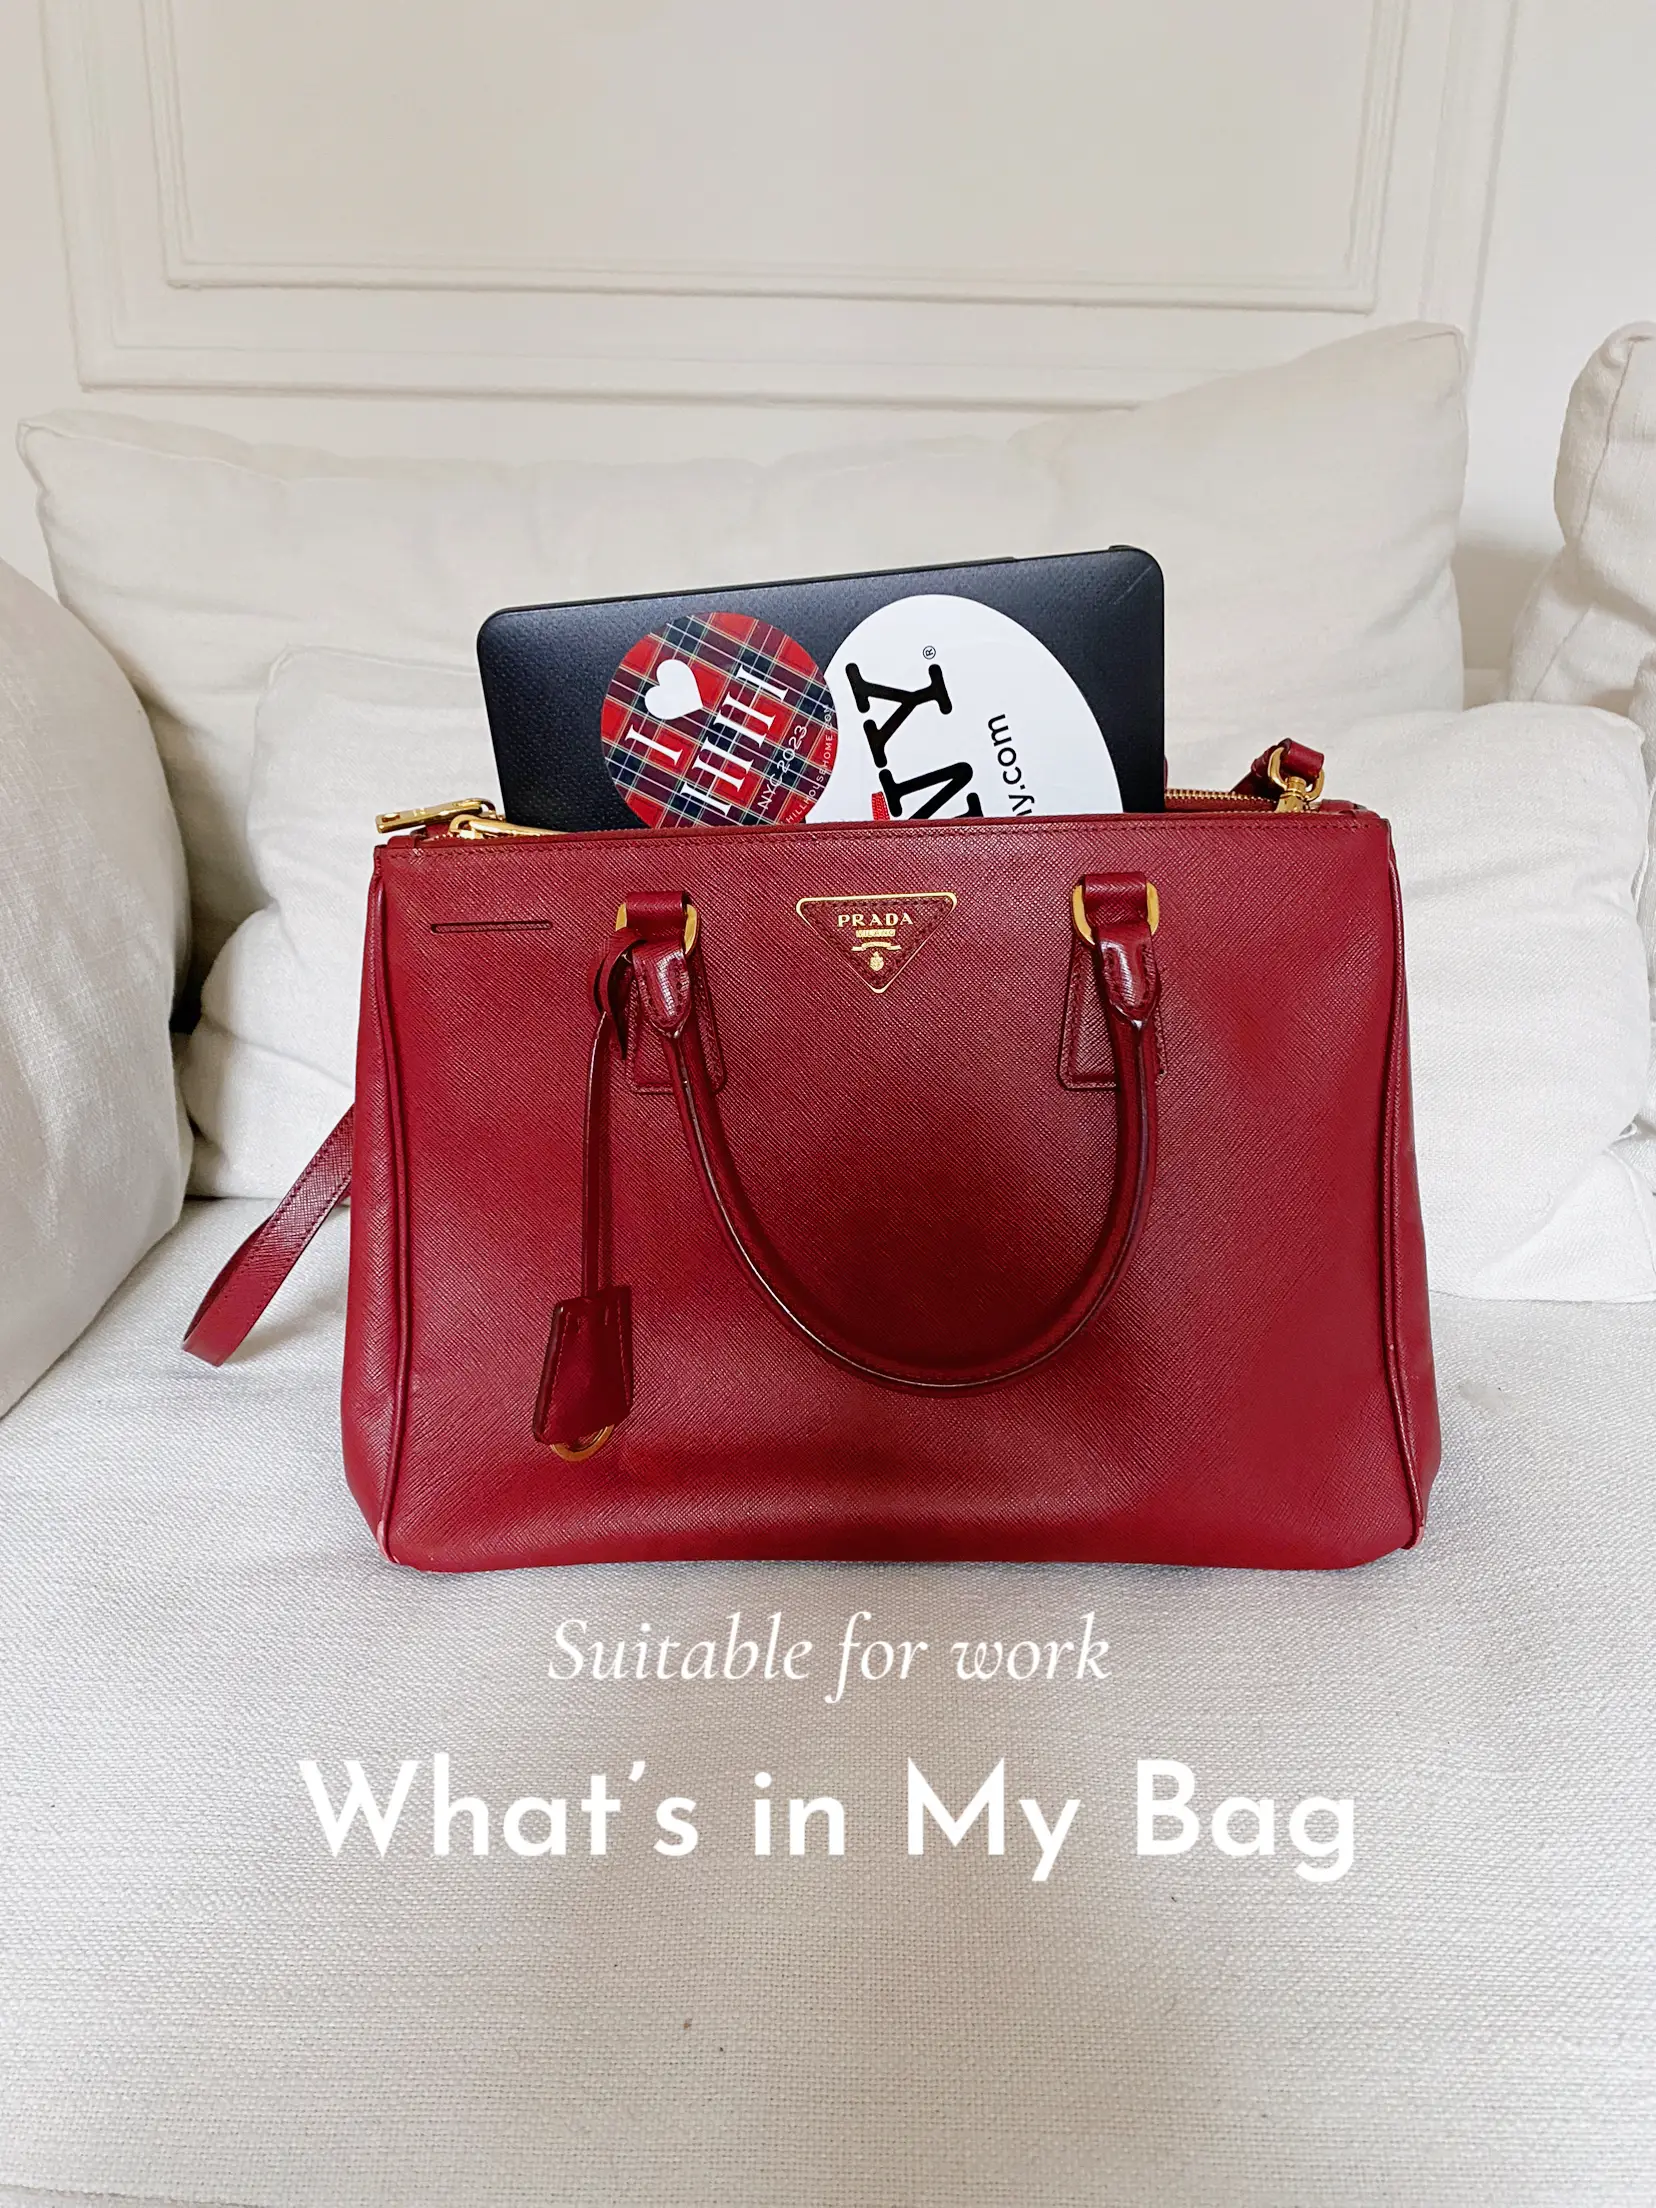 Prada Double Bag- What's in My Bag 